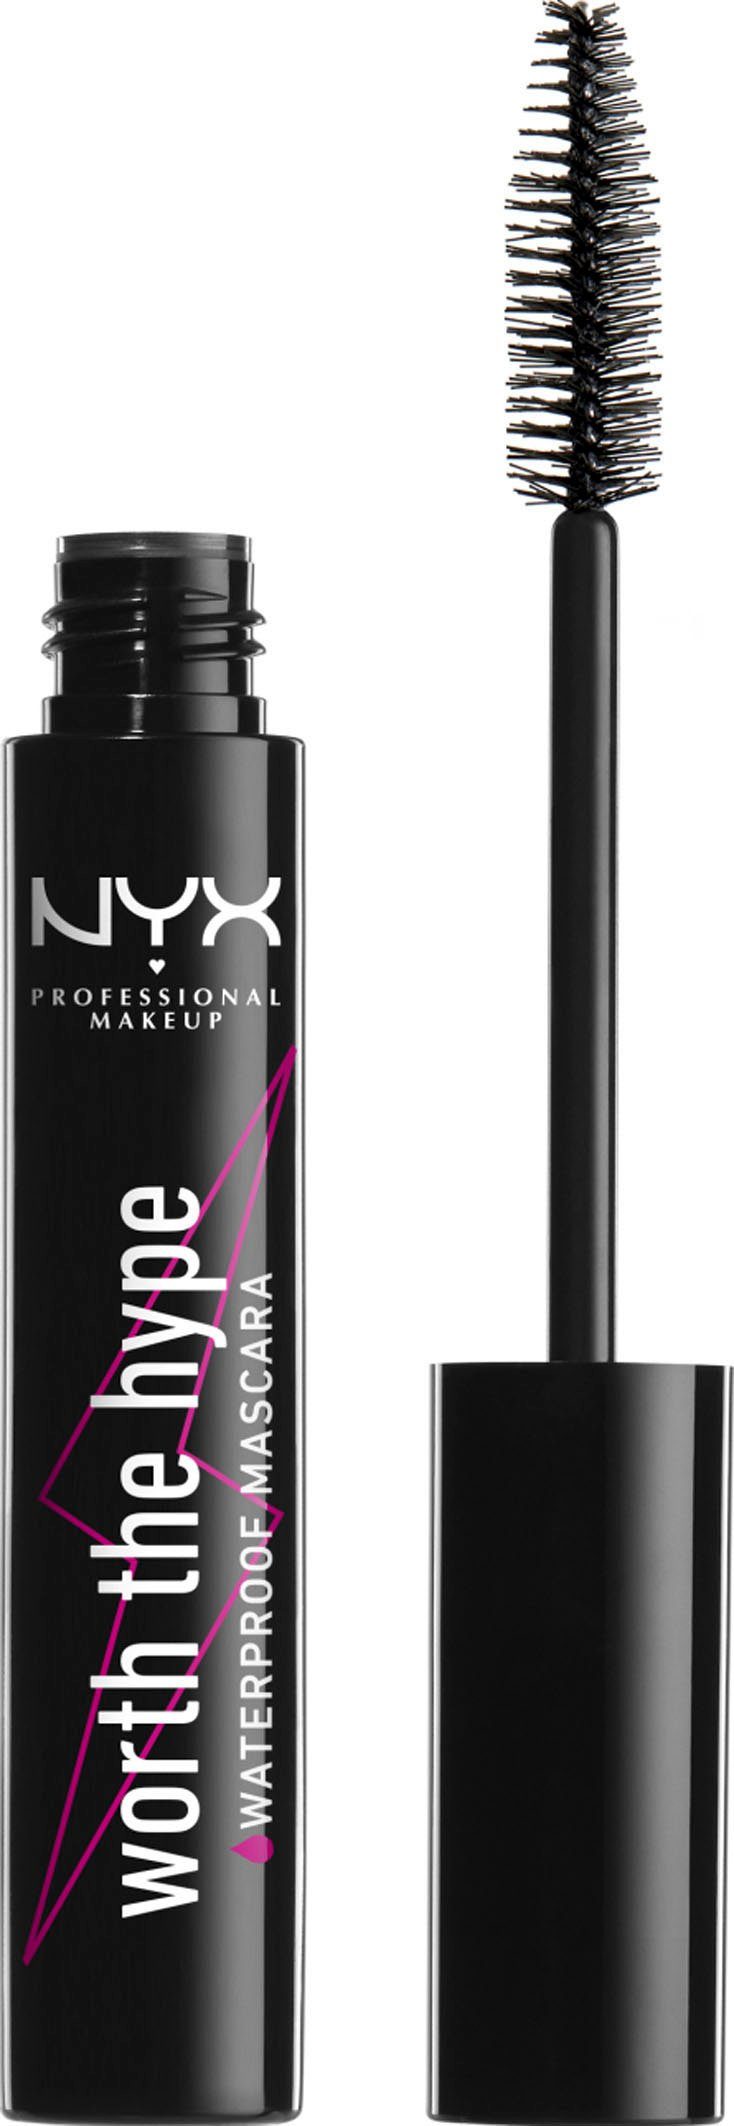 NYX Mascara Professional Makeup Worth Mascara The Waterproof Hype